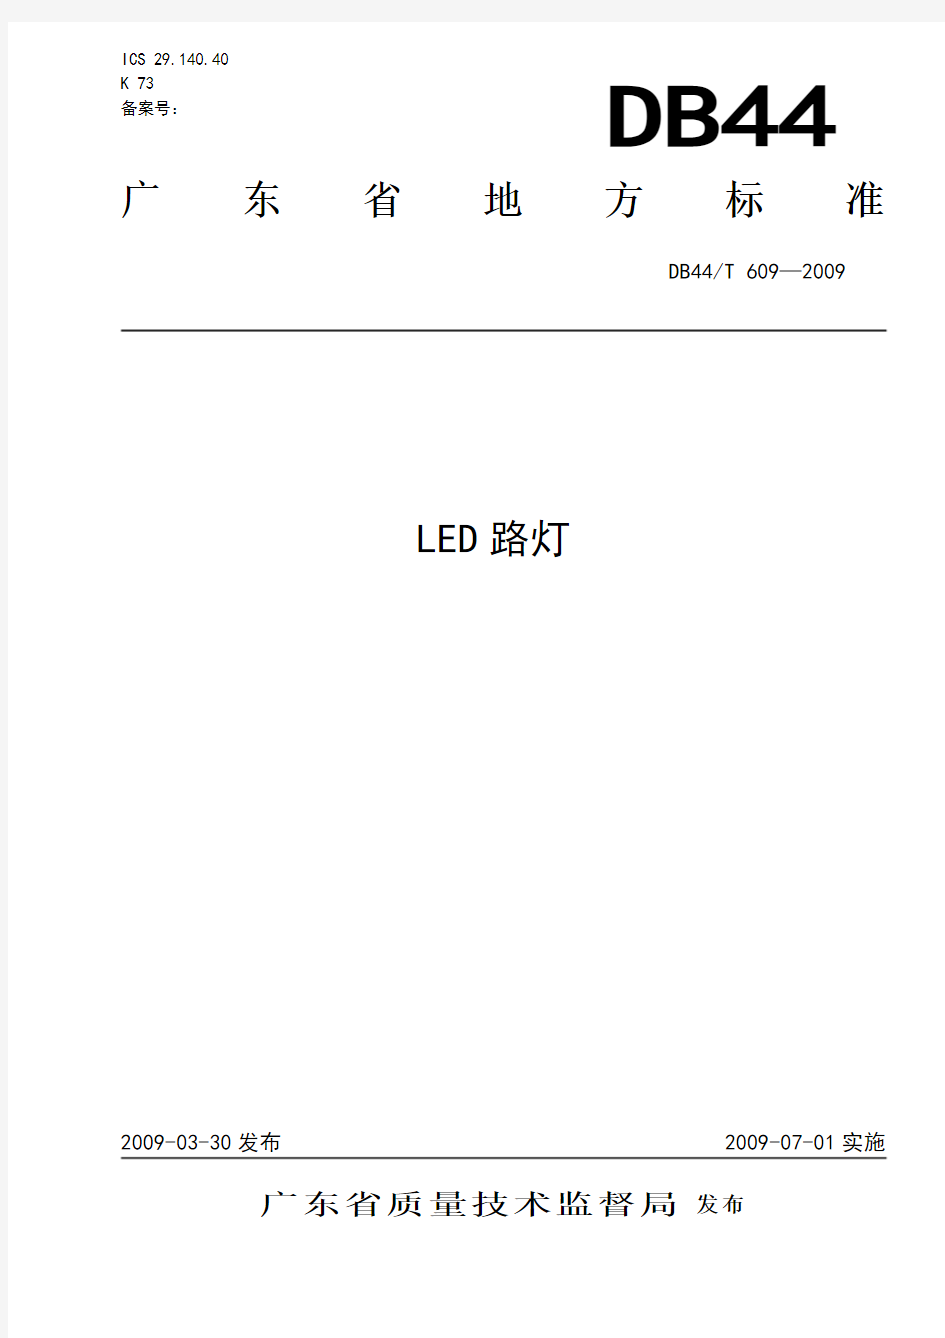 LED路灯广东省地方标准DB44-T609-2009